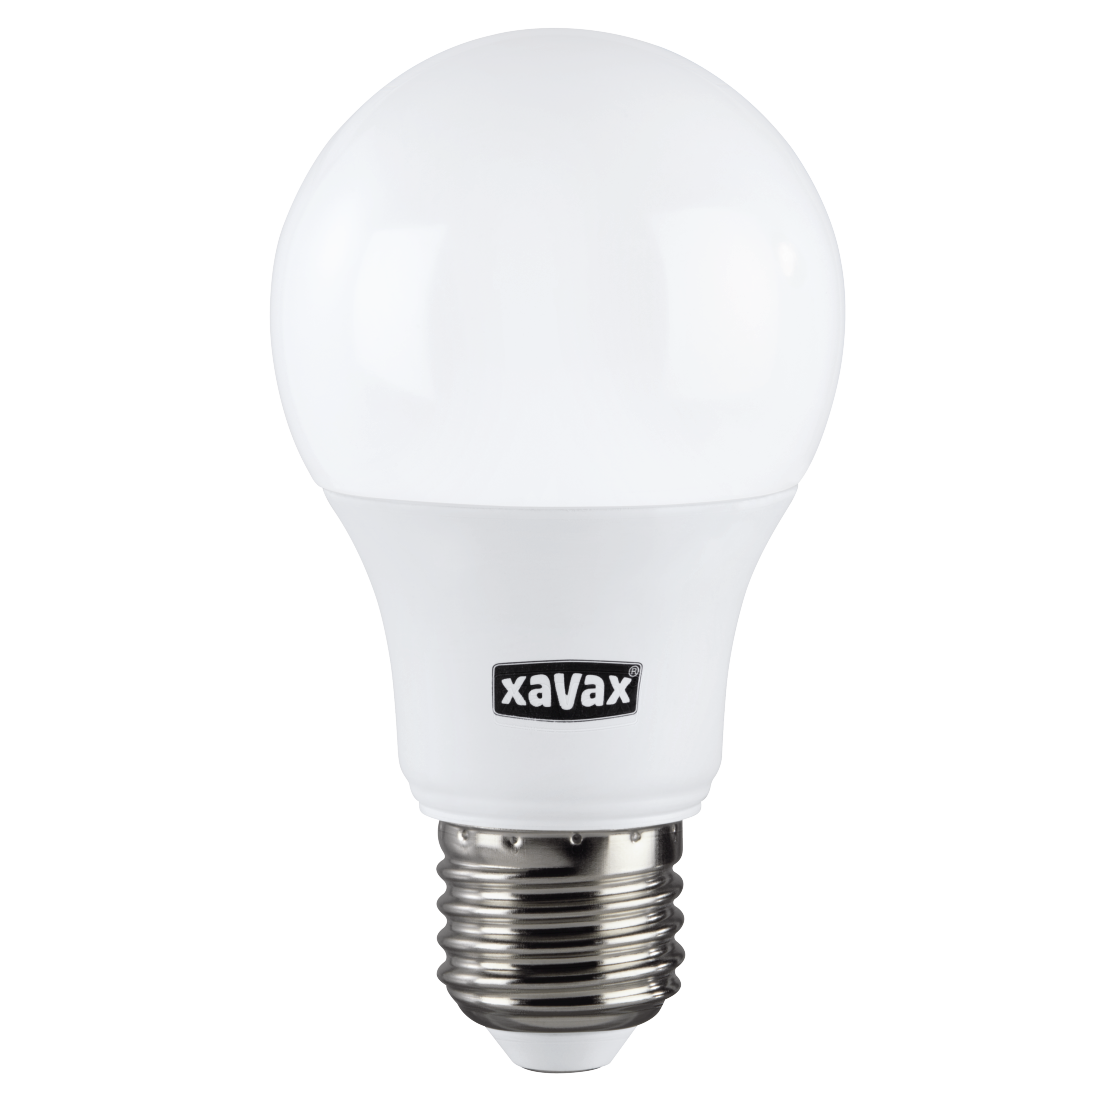 abx Druckfähige Abbildung - Xavax, LED-Lampe, E27, 470lm ersetzt 40W, Glühlampe, Warmweiß, RA90